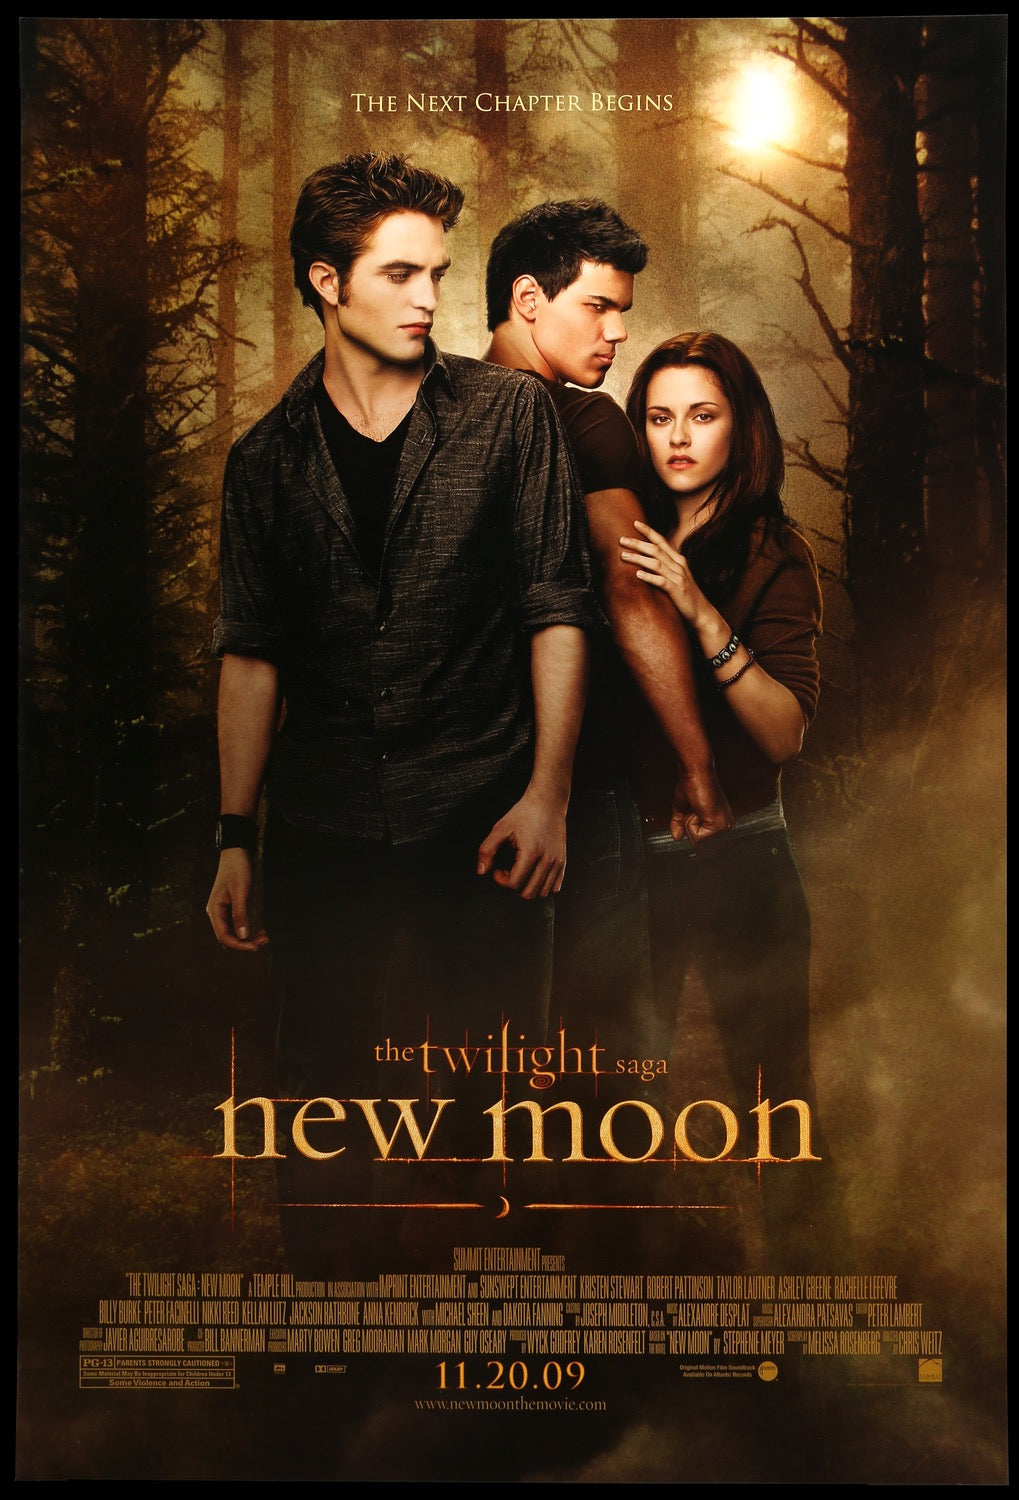 Twilight Saga - New Moon (2009) original movie poster for sale at Original Film Art